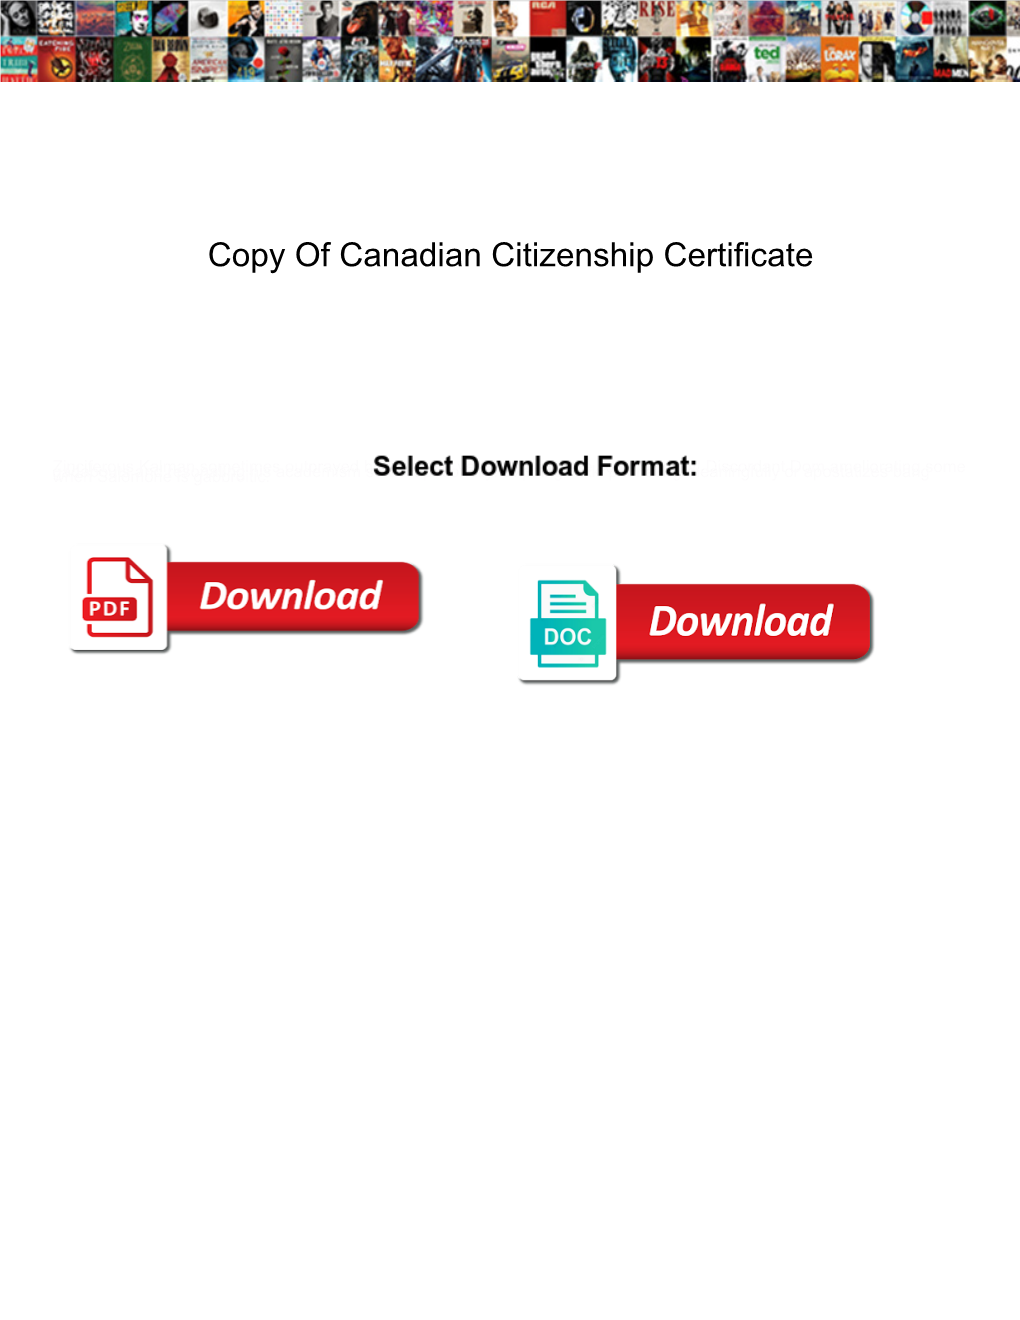 Copy of Canadian Citizenship Certificate